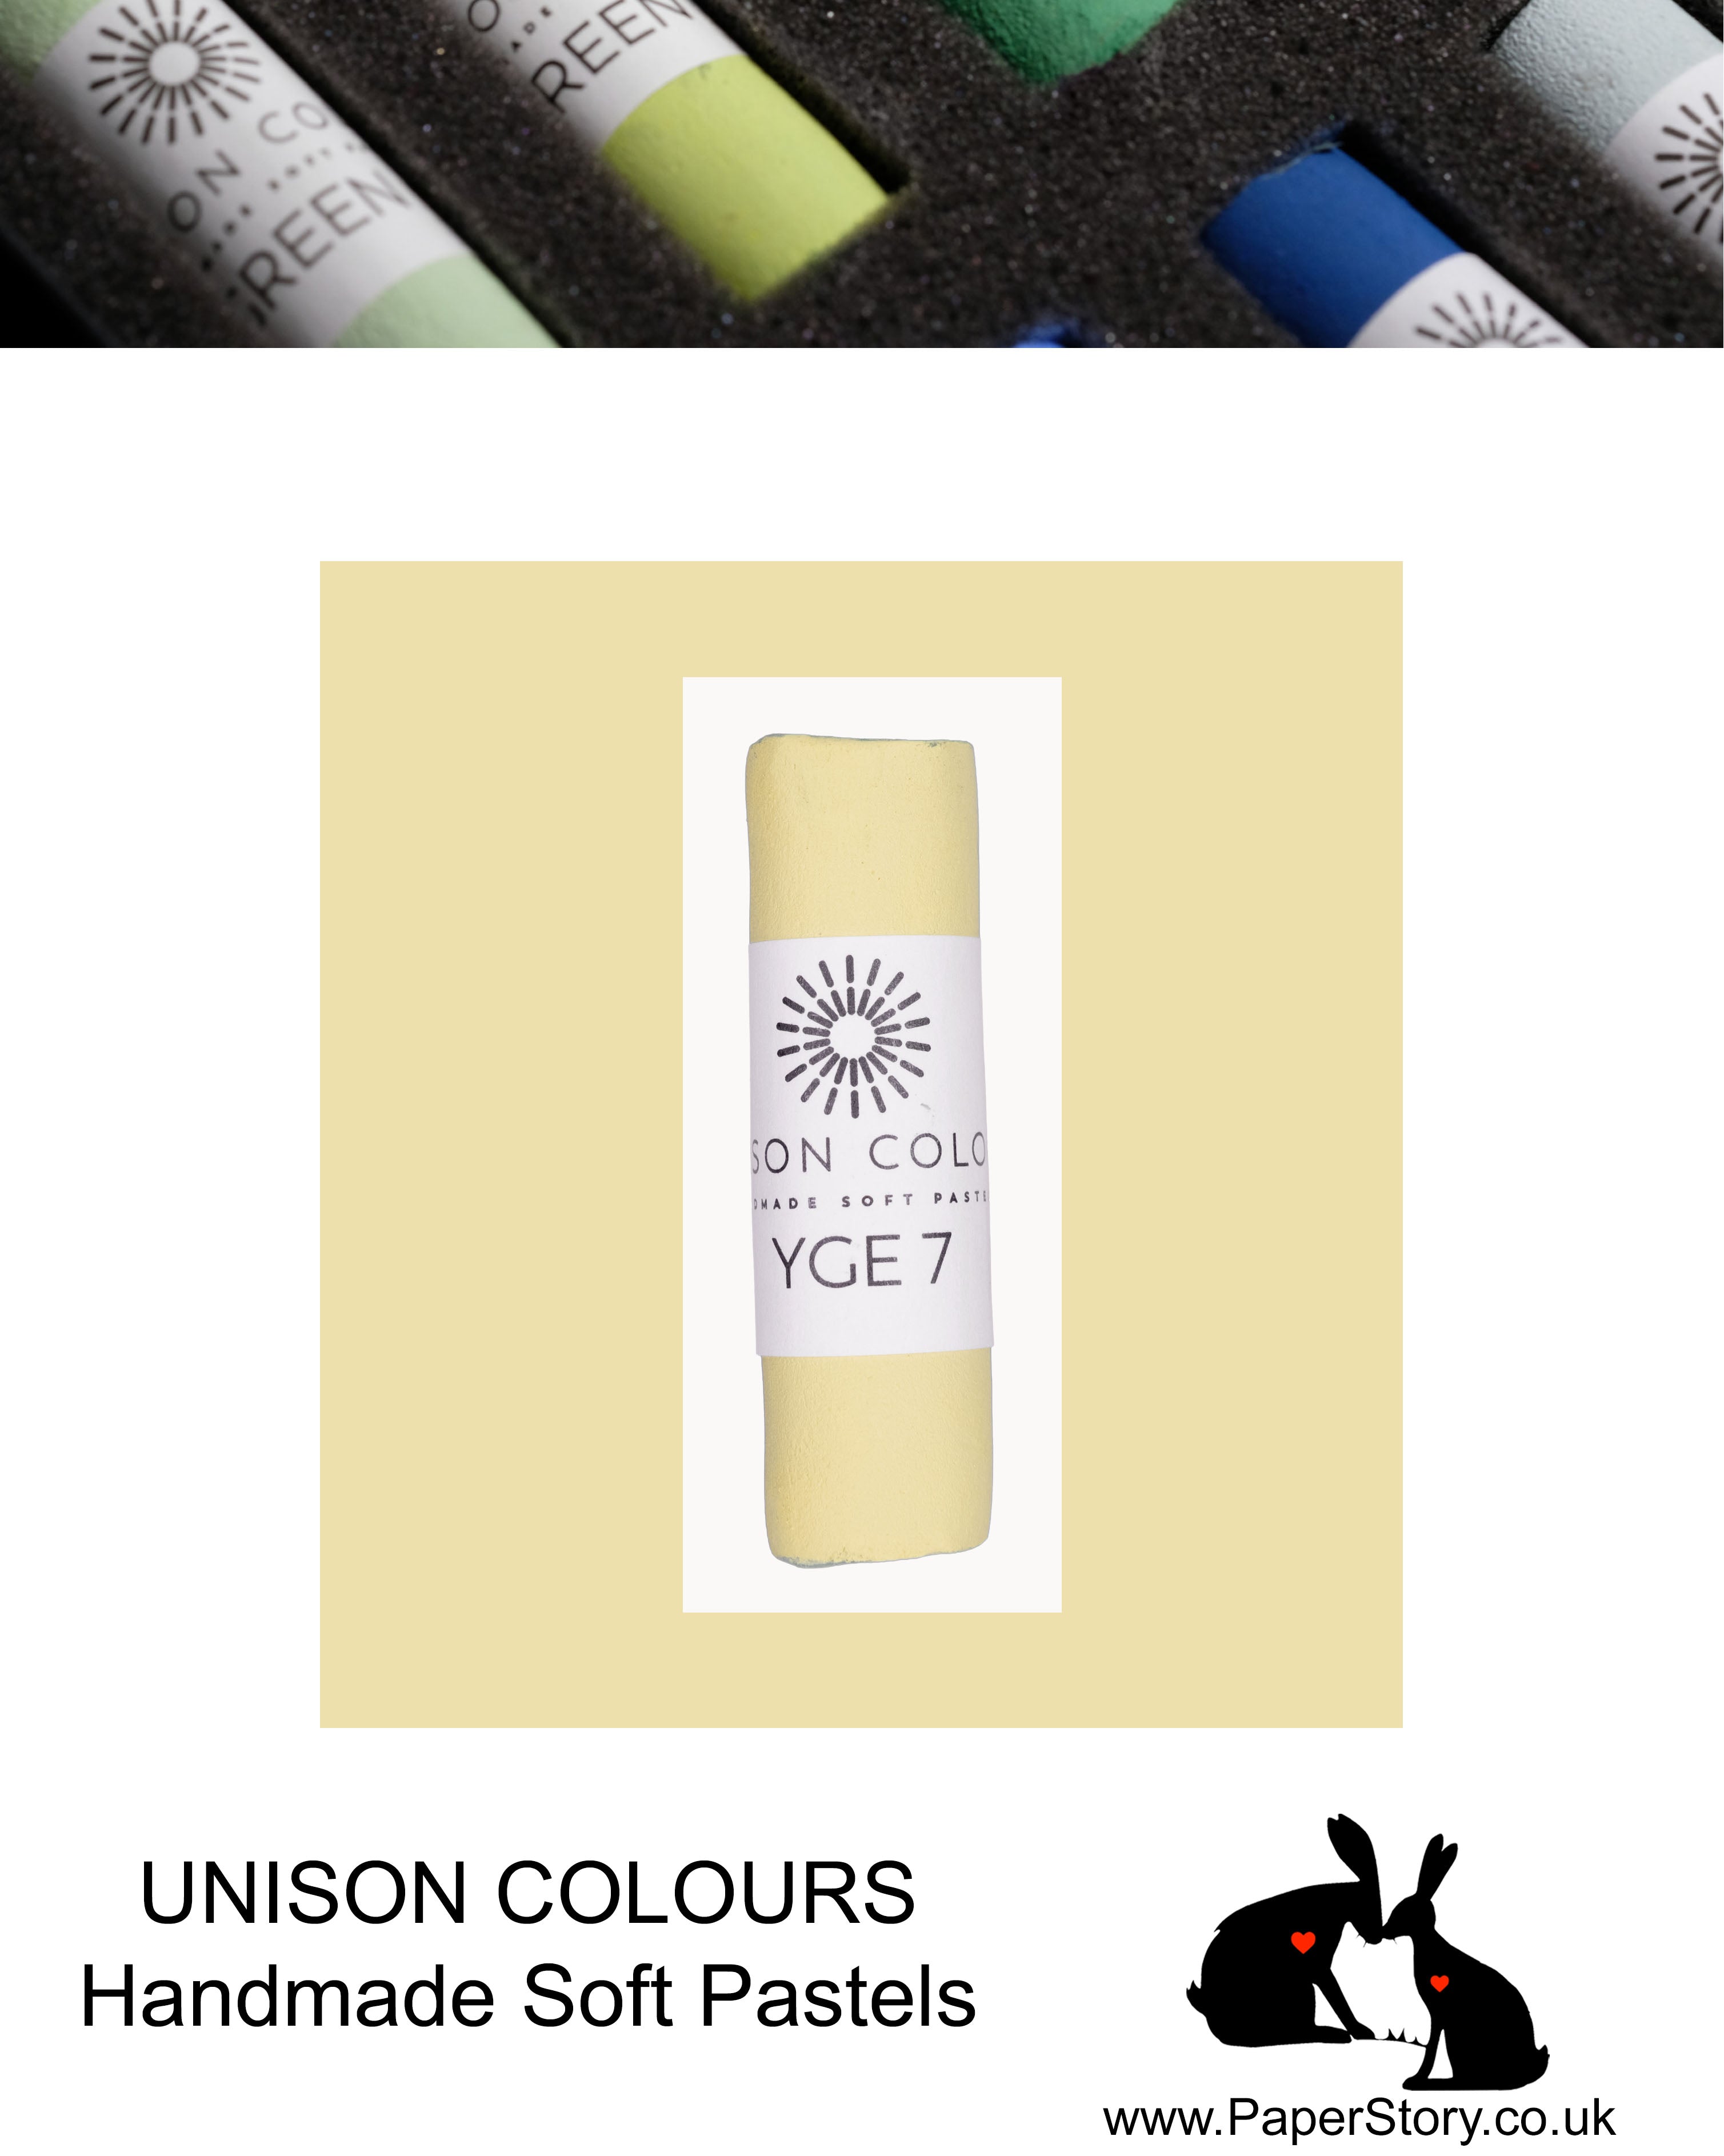 Unison Colour Handmade Soft Pastels Yellow Green Earth 7 - Size Regular